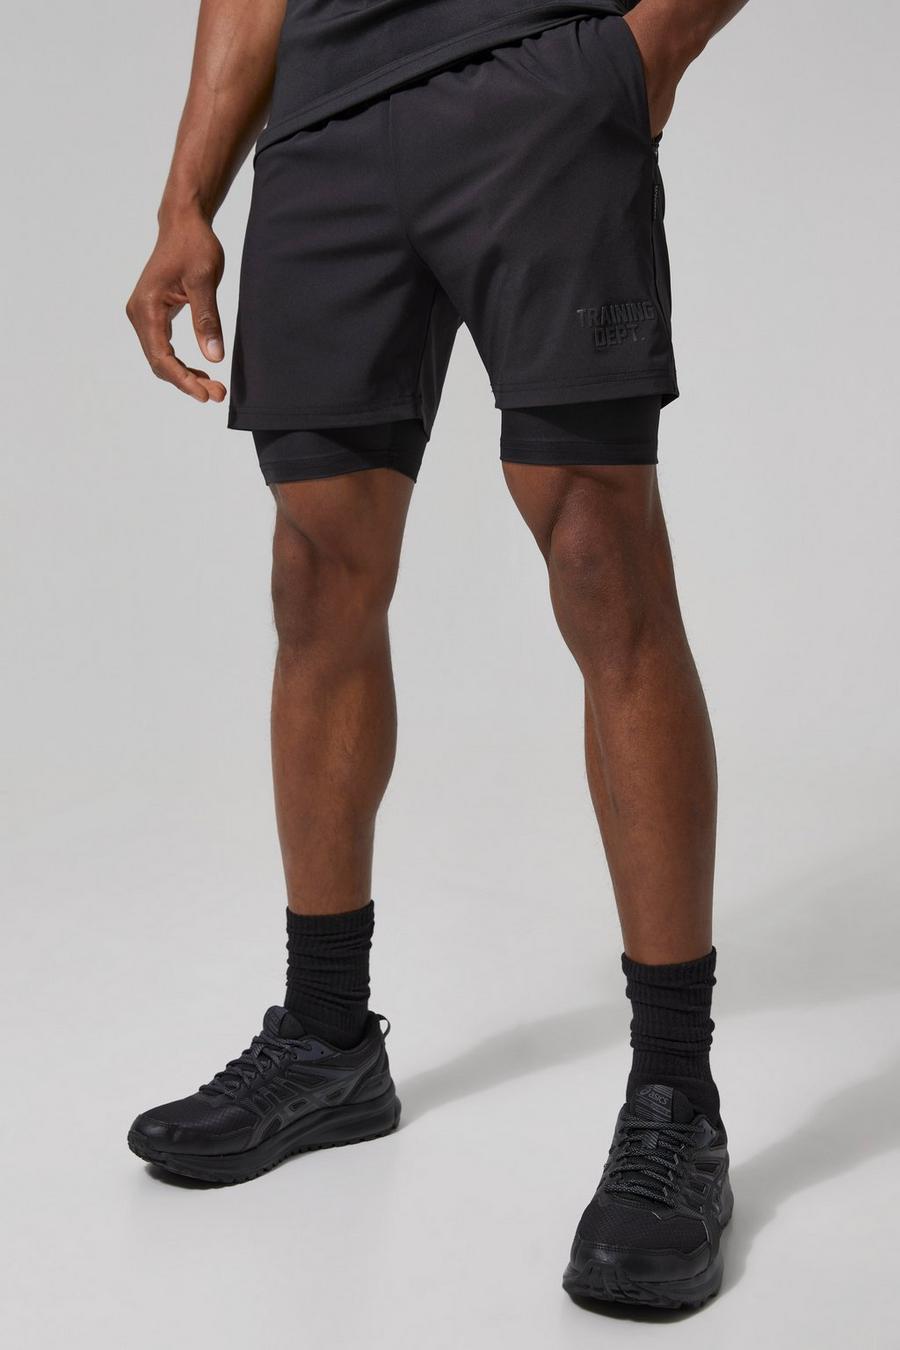 Pantaloncini 2 in 1 Man Active Training Dept, Black negro